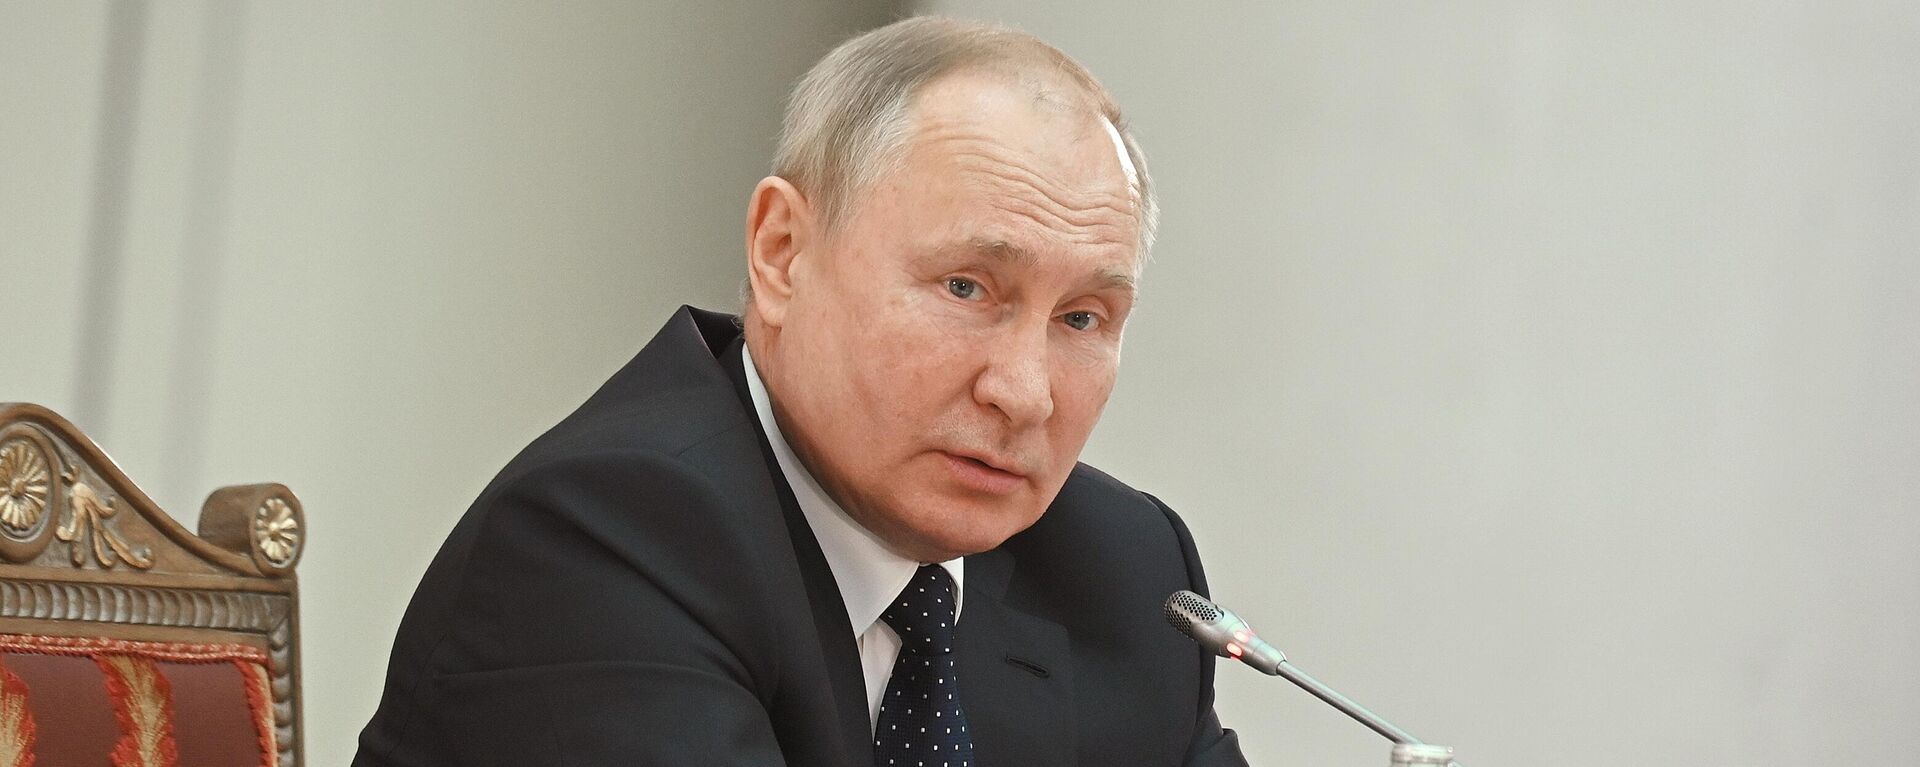 Predsednik Rusije Vladimir Putin - Sputnik Srbija, 1920, 28.12.2021